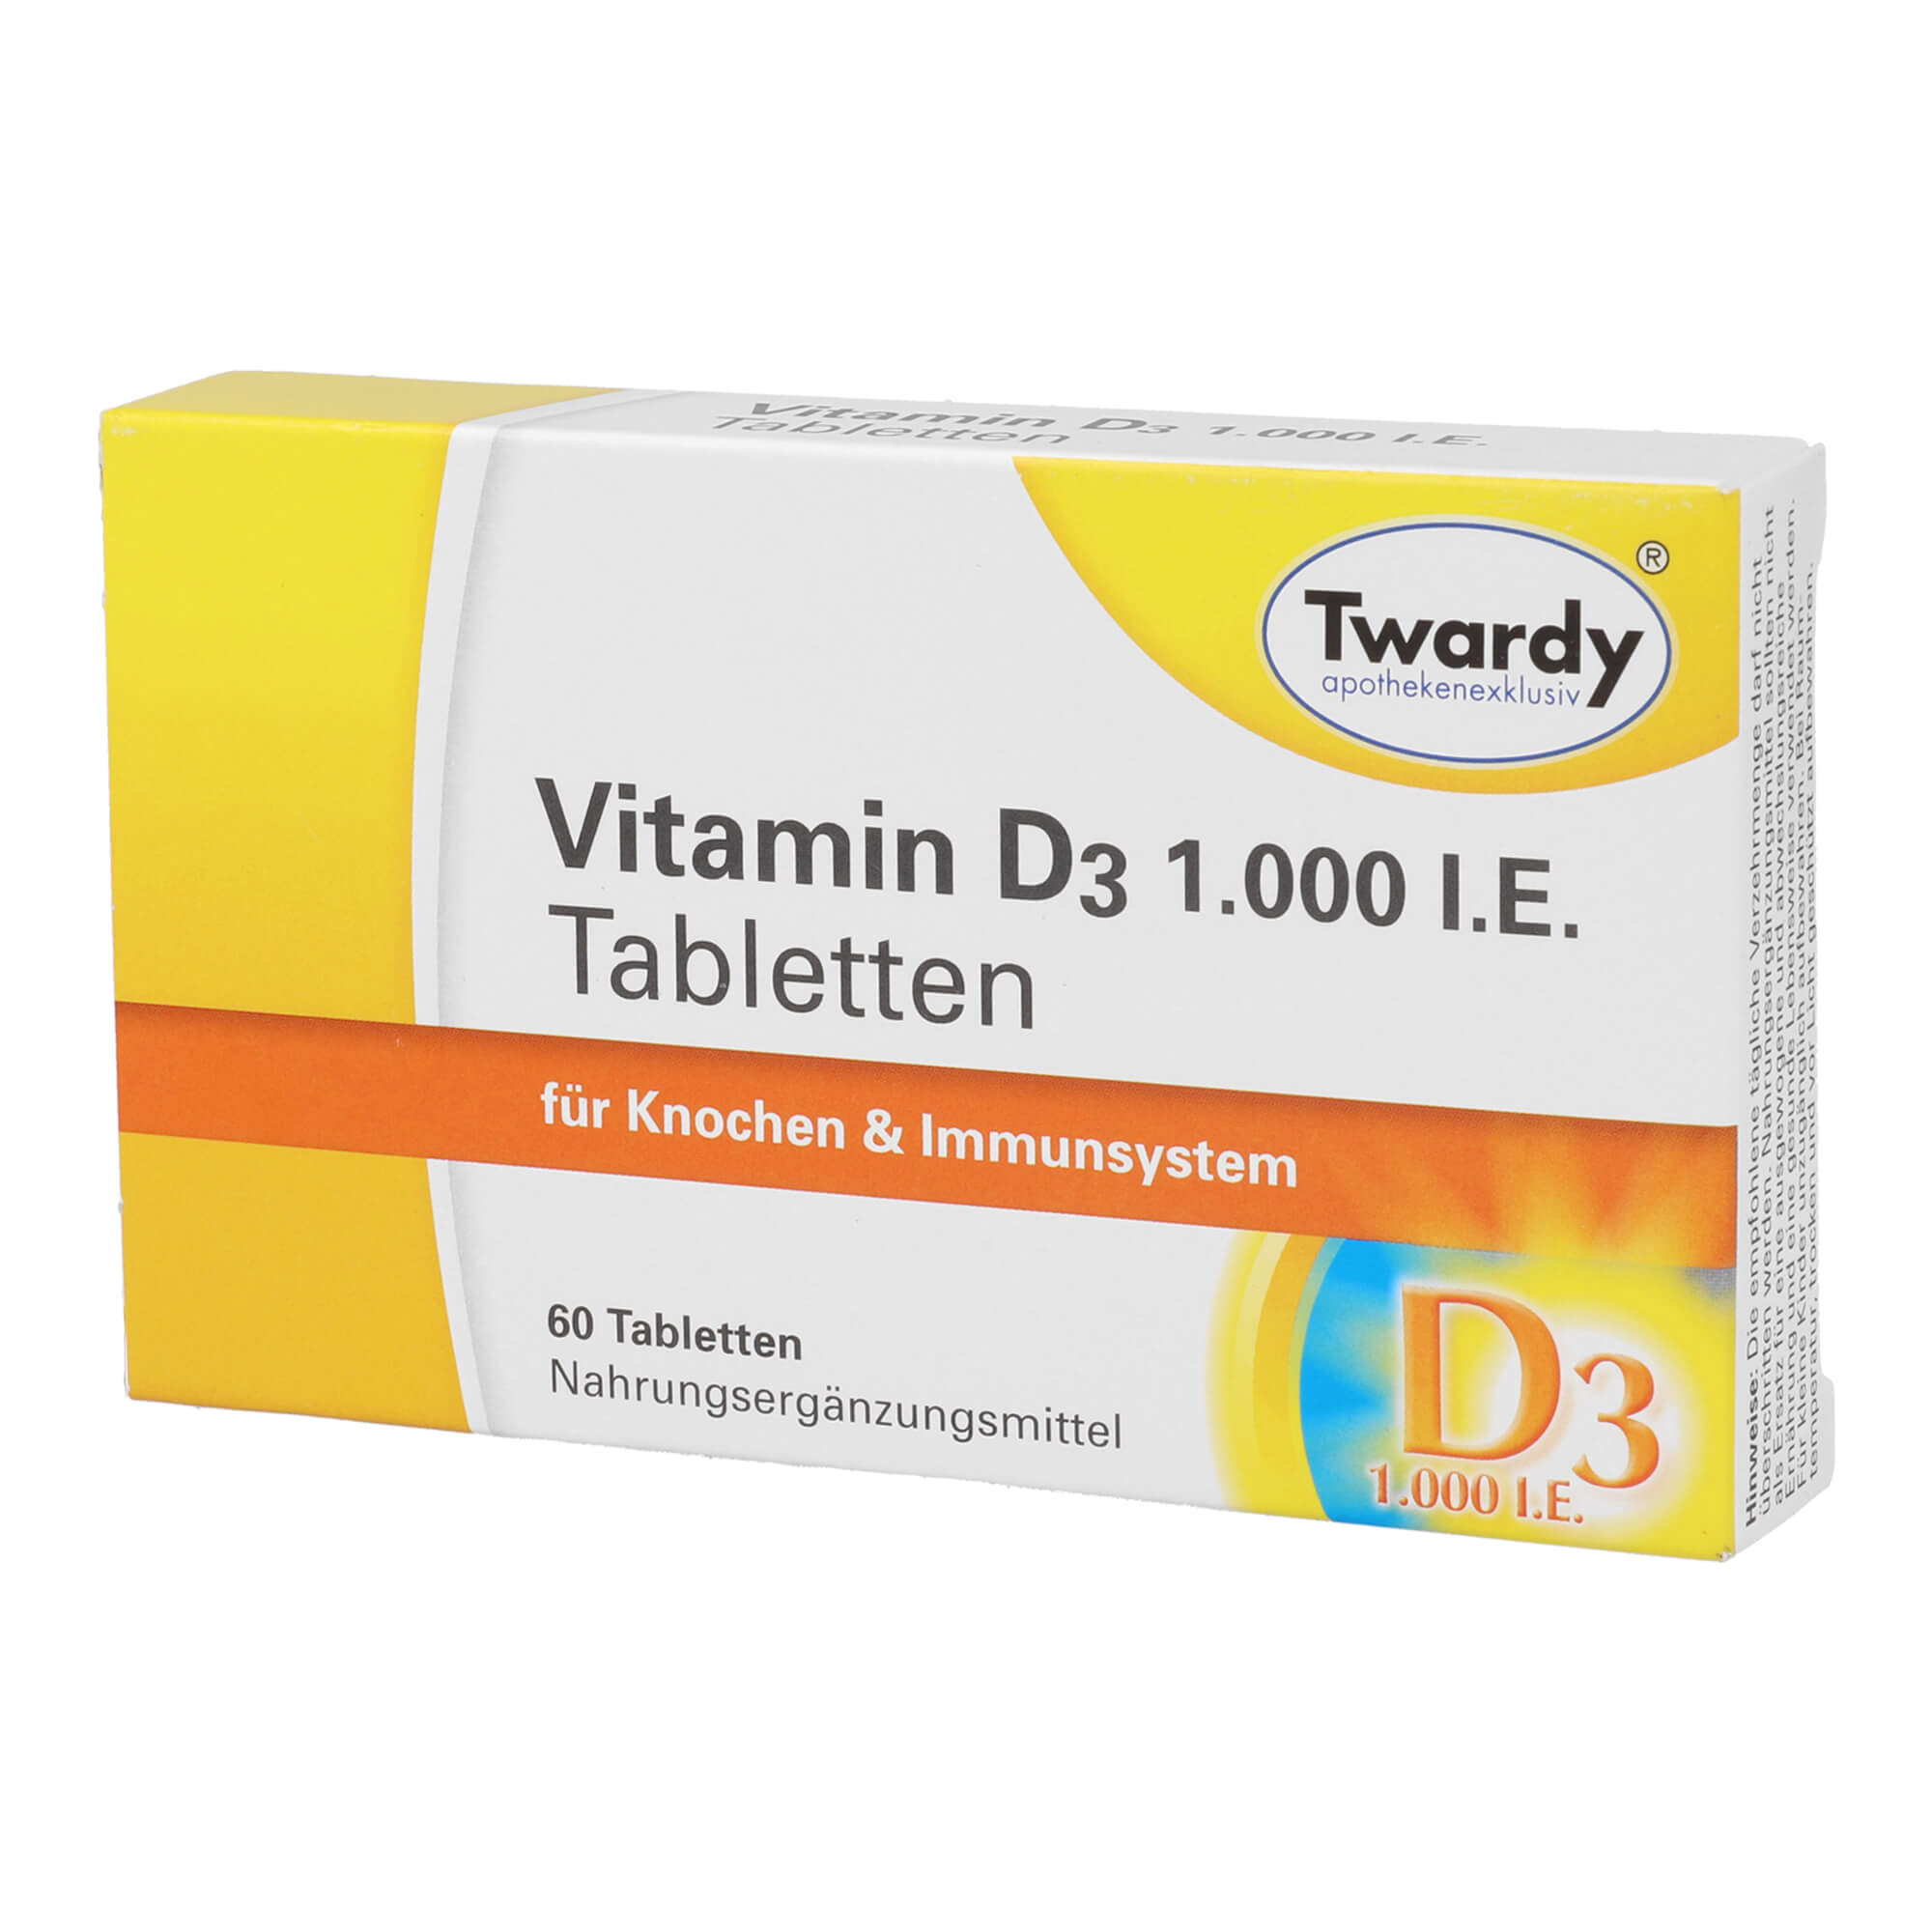 Nahrungsergänzungsmittel mit Vitamin D3.